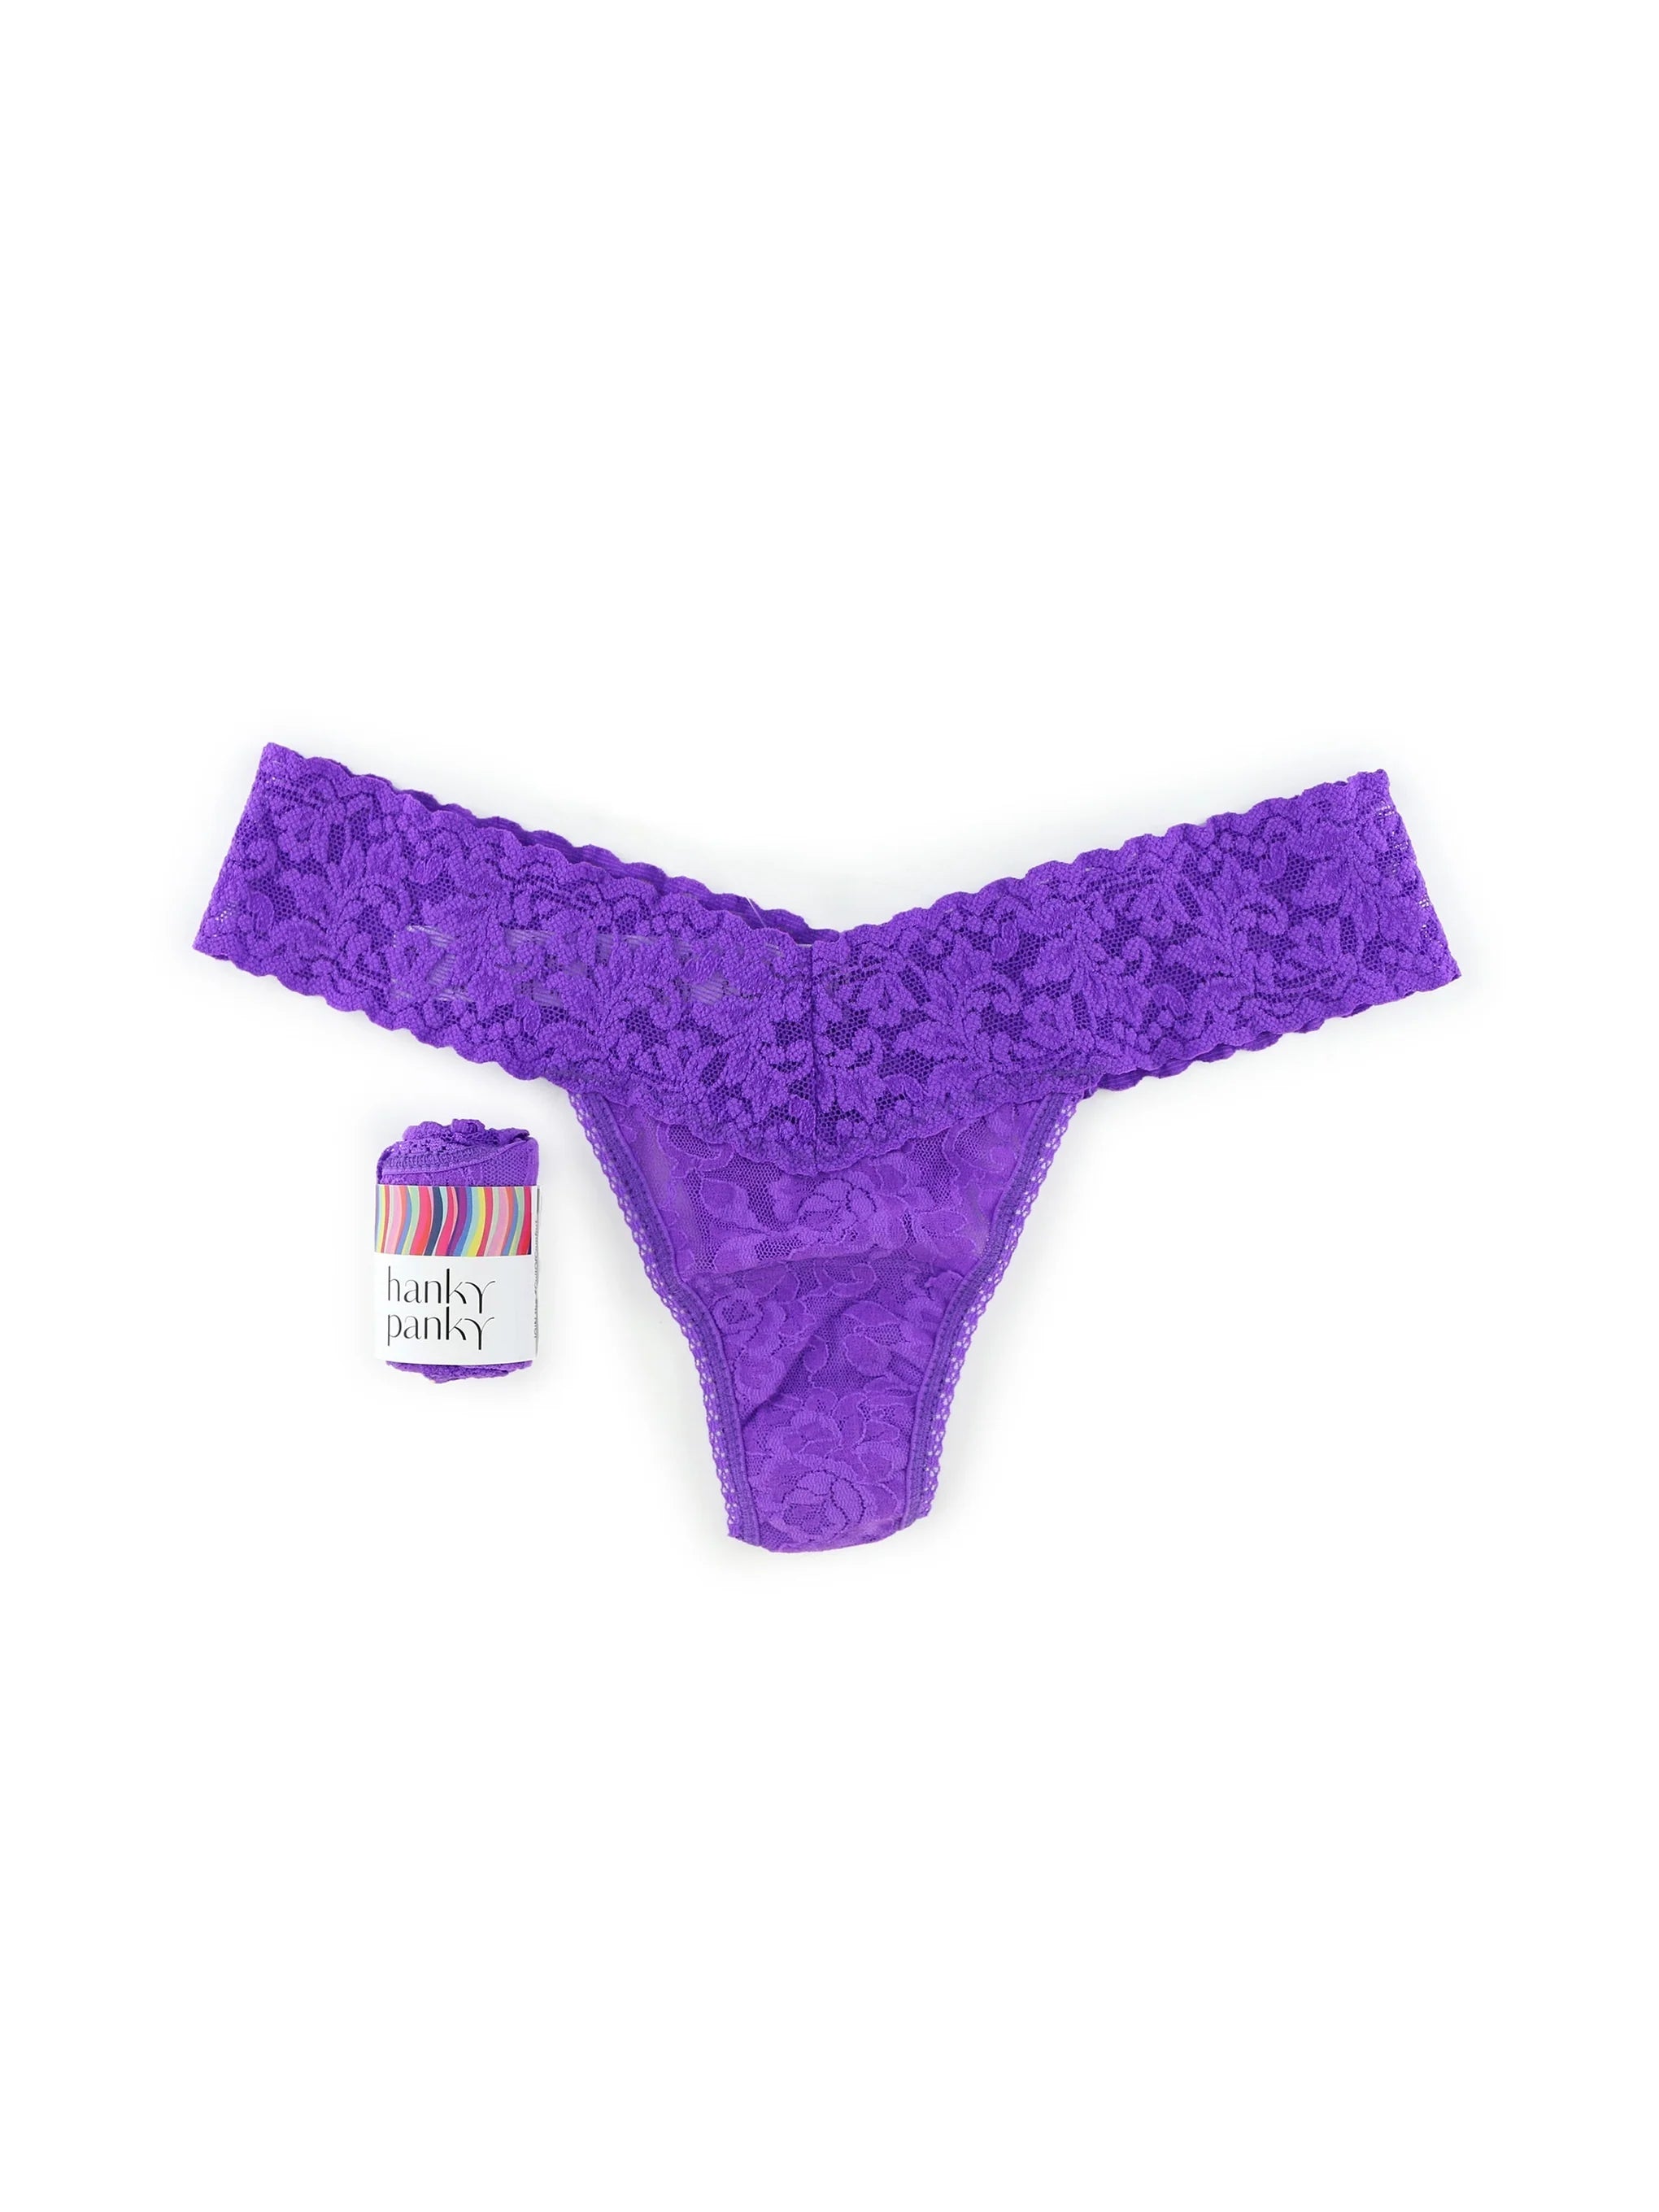 Buy vivid-violet Hanky Panky Signature Lace Original Rise Thong-Packaged 4811p